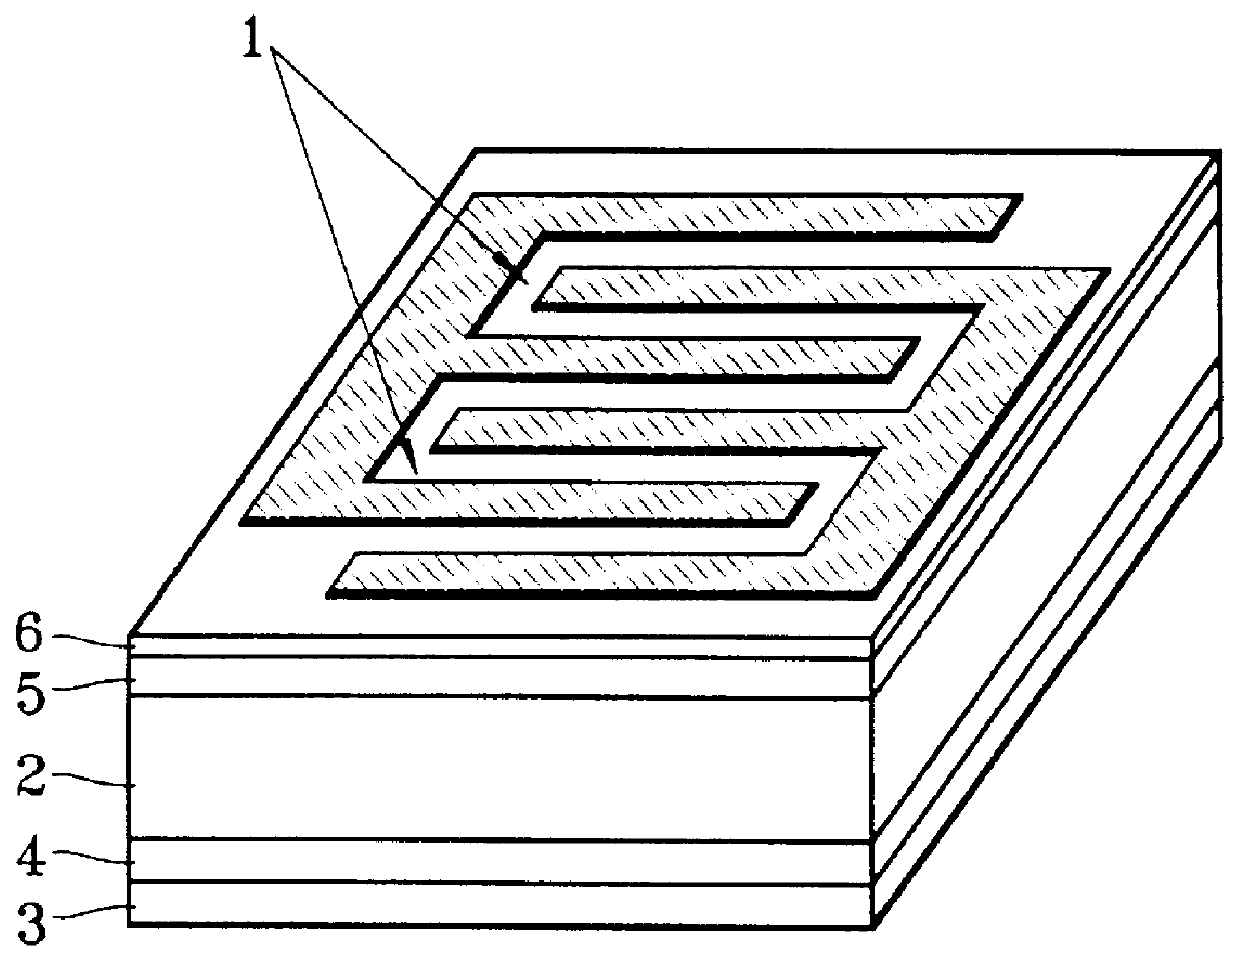 Metal-semiconductor-metal photodetector